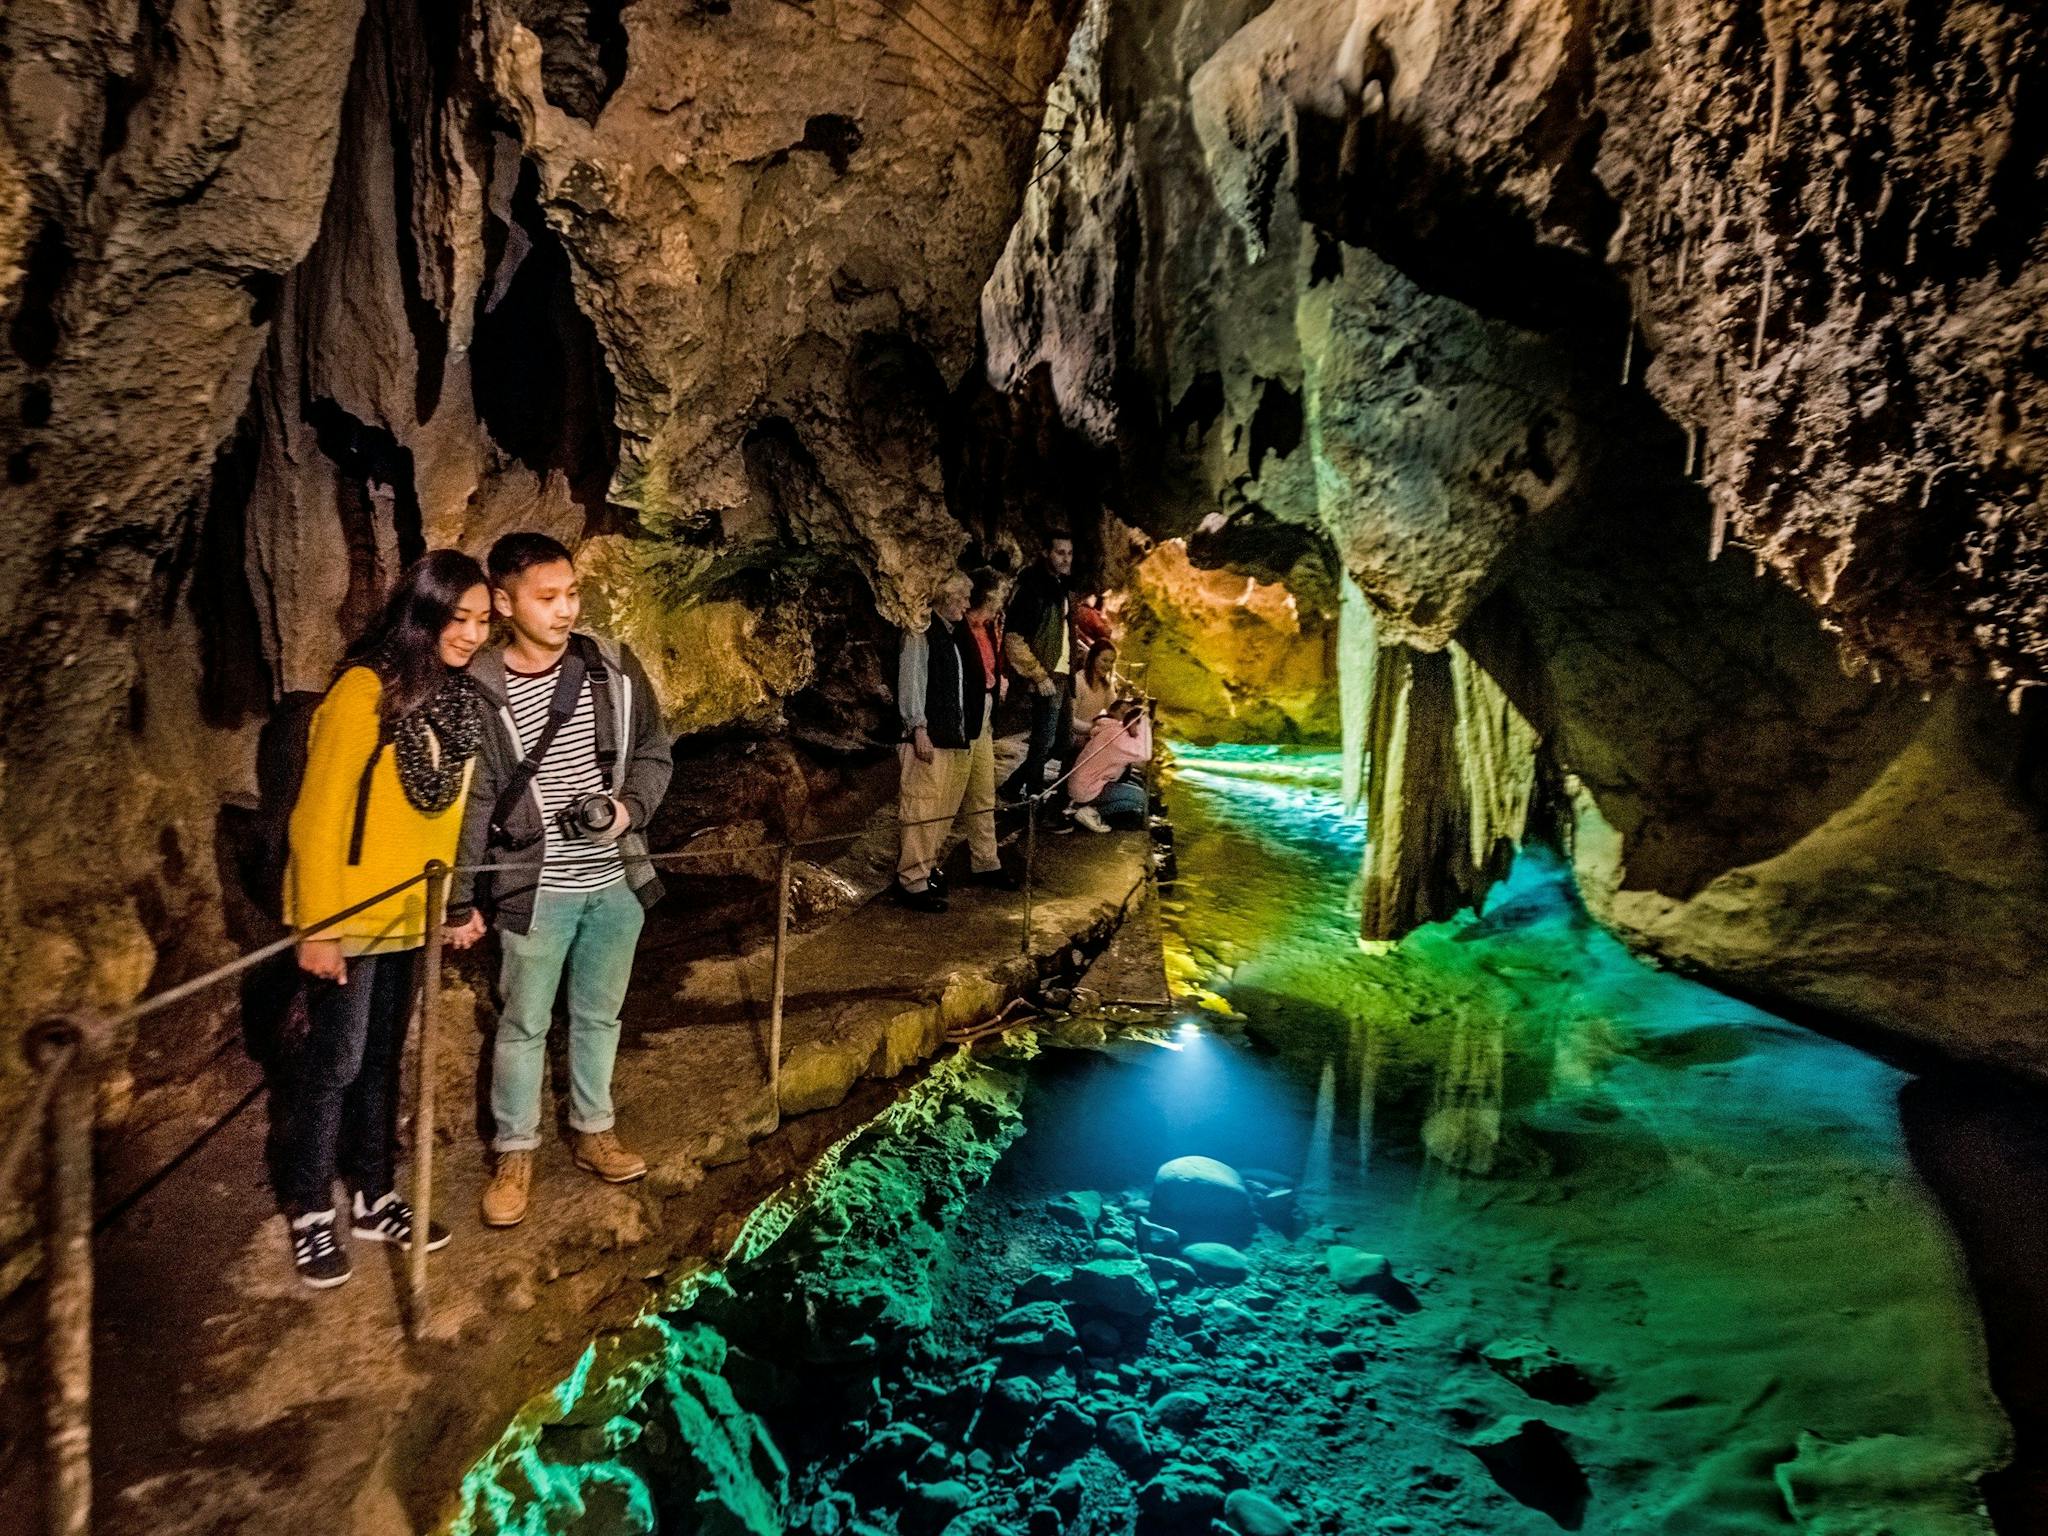 jenolan caves visit